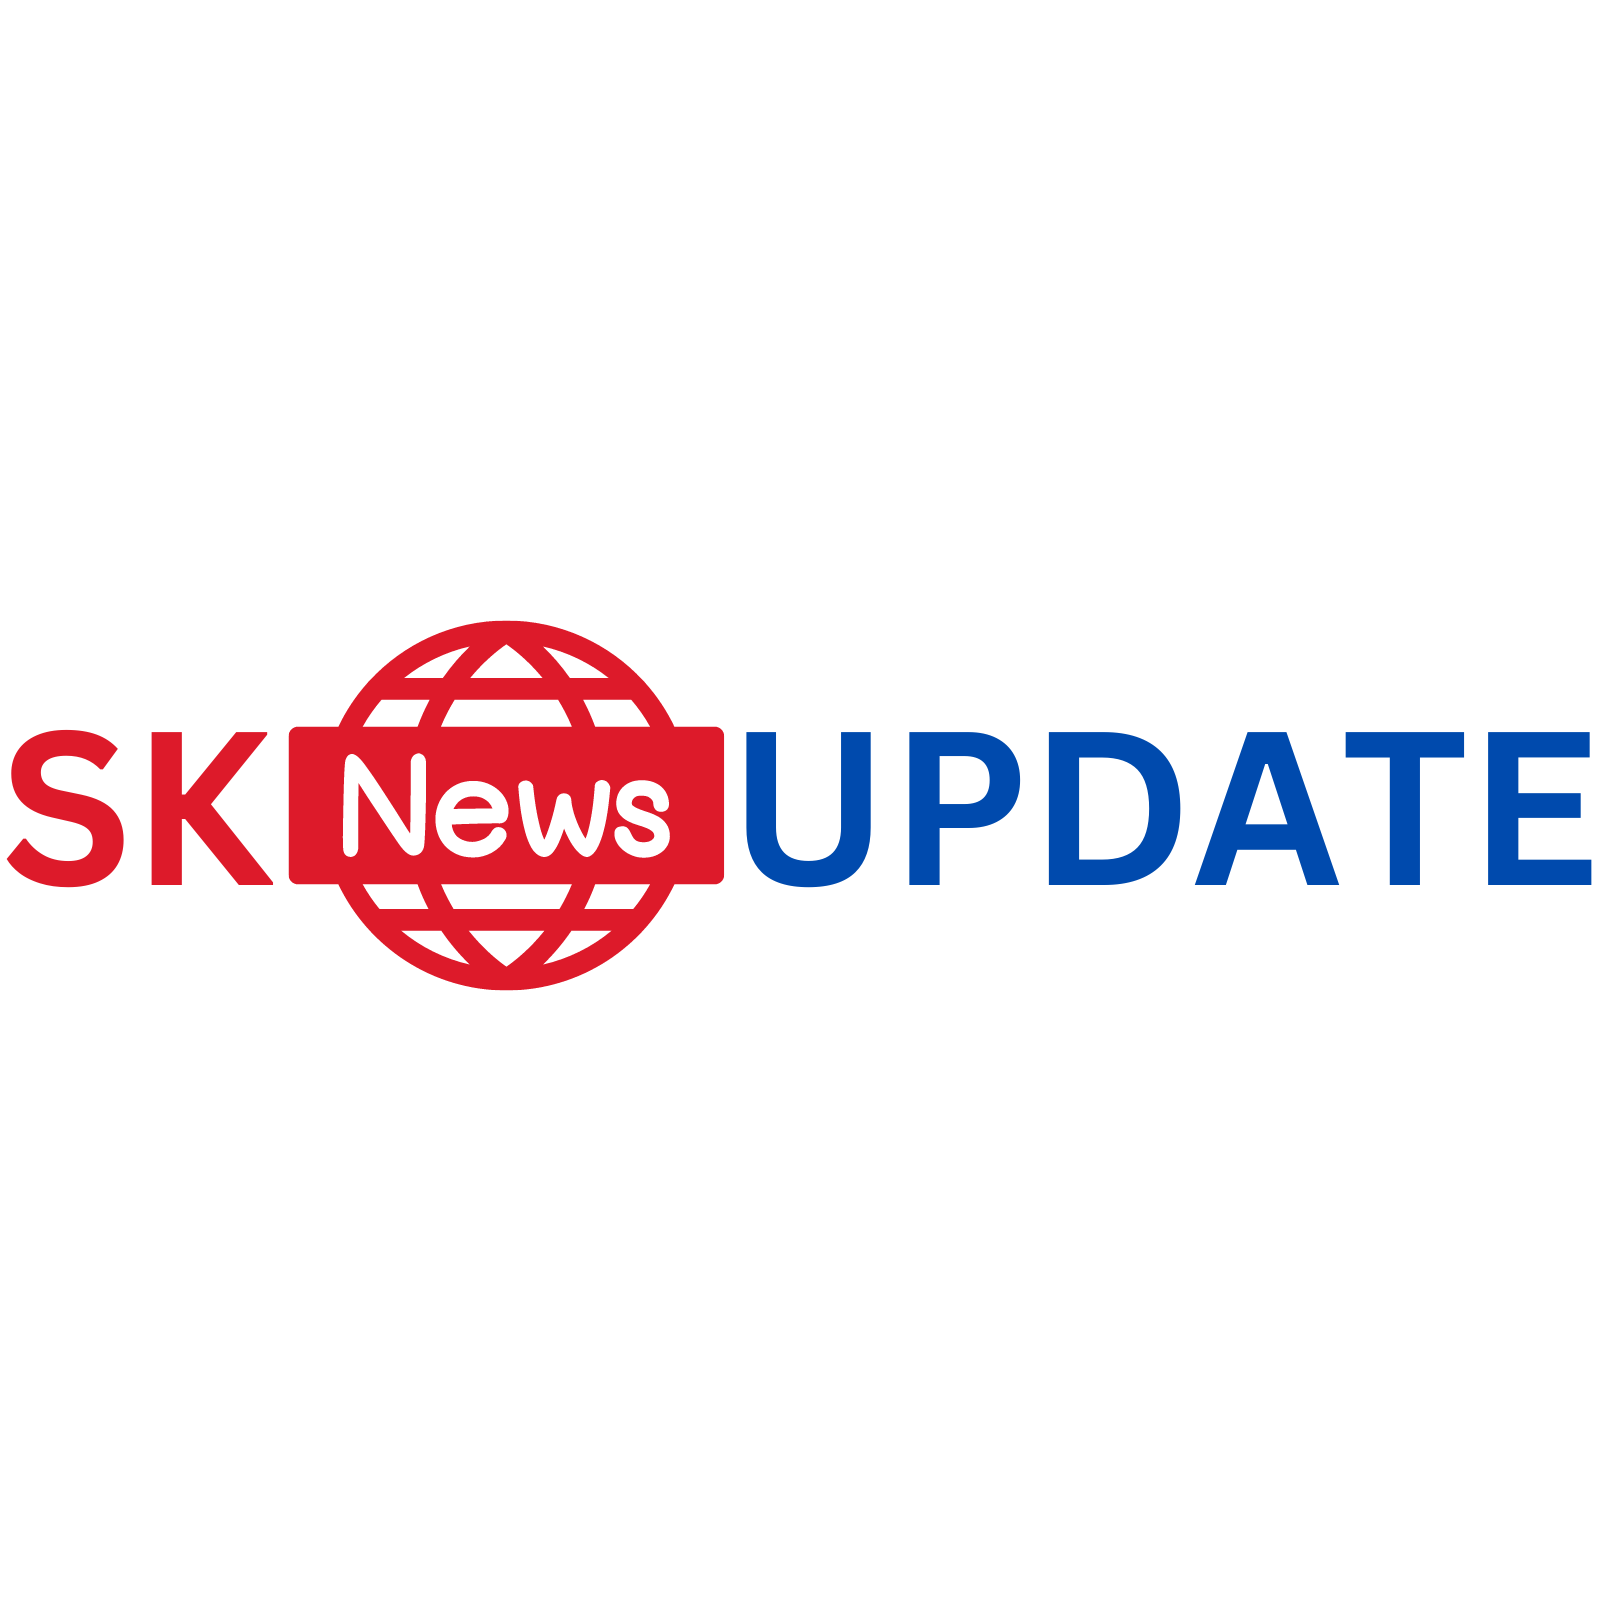 SK News Update